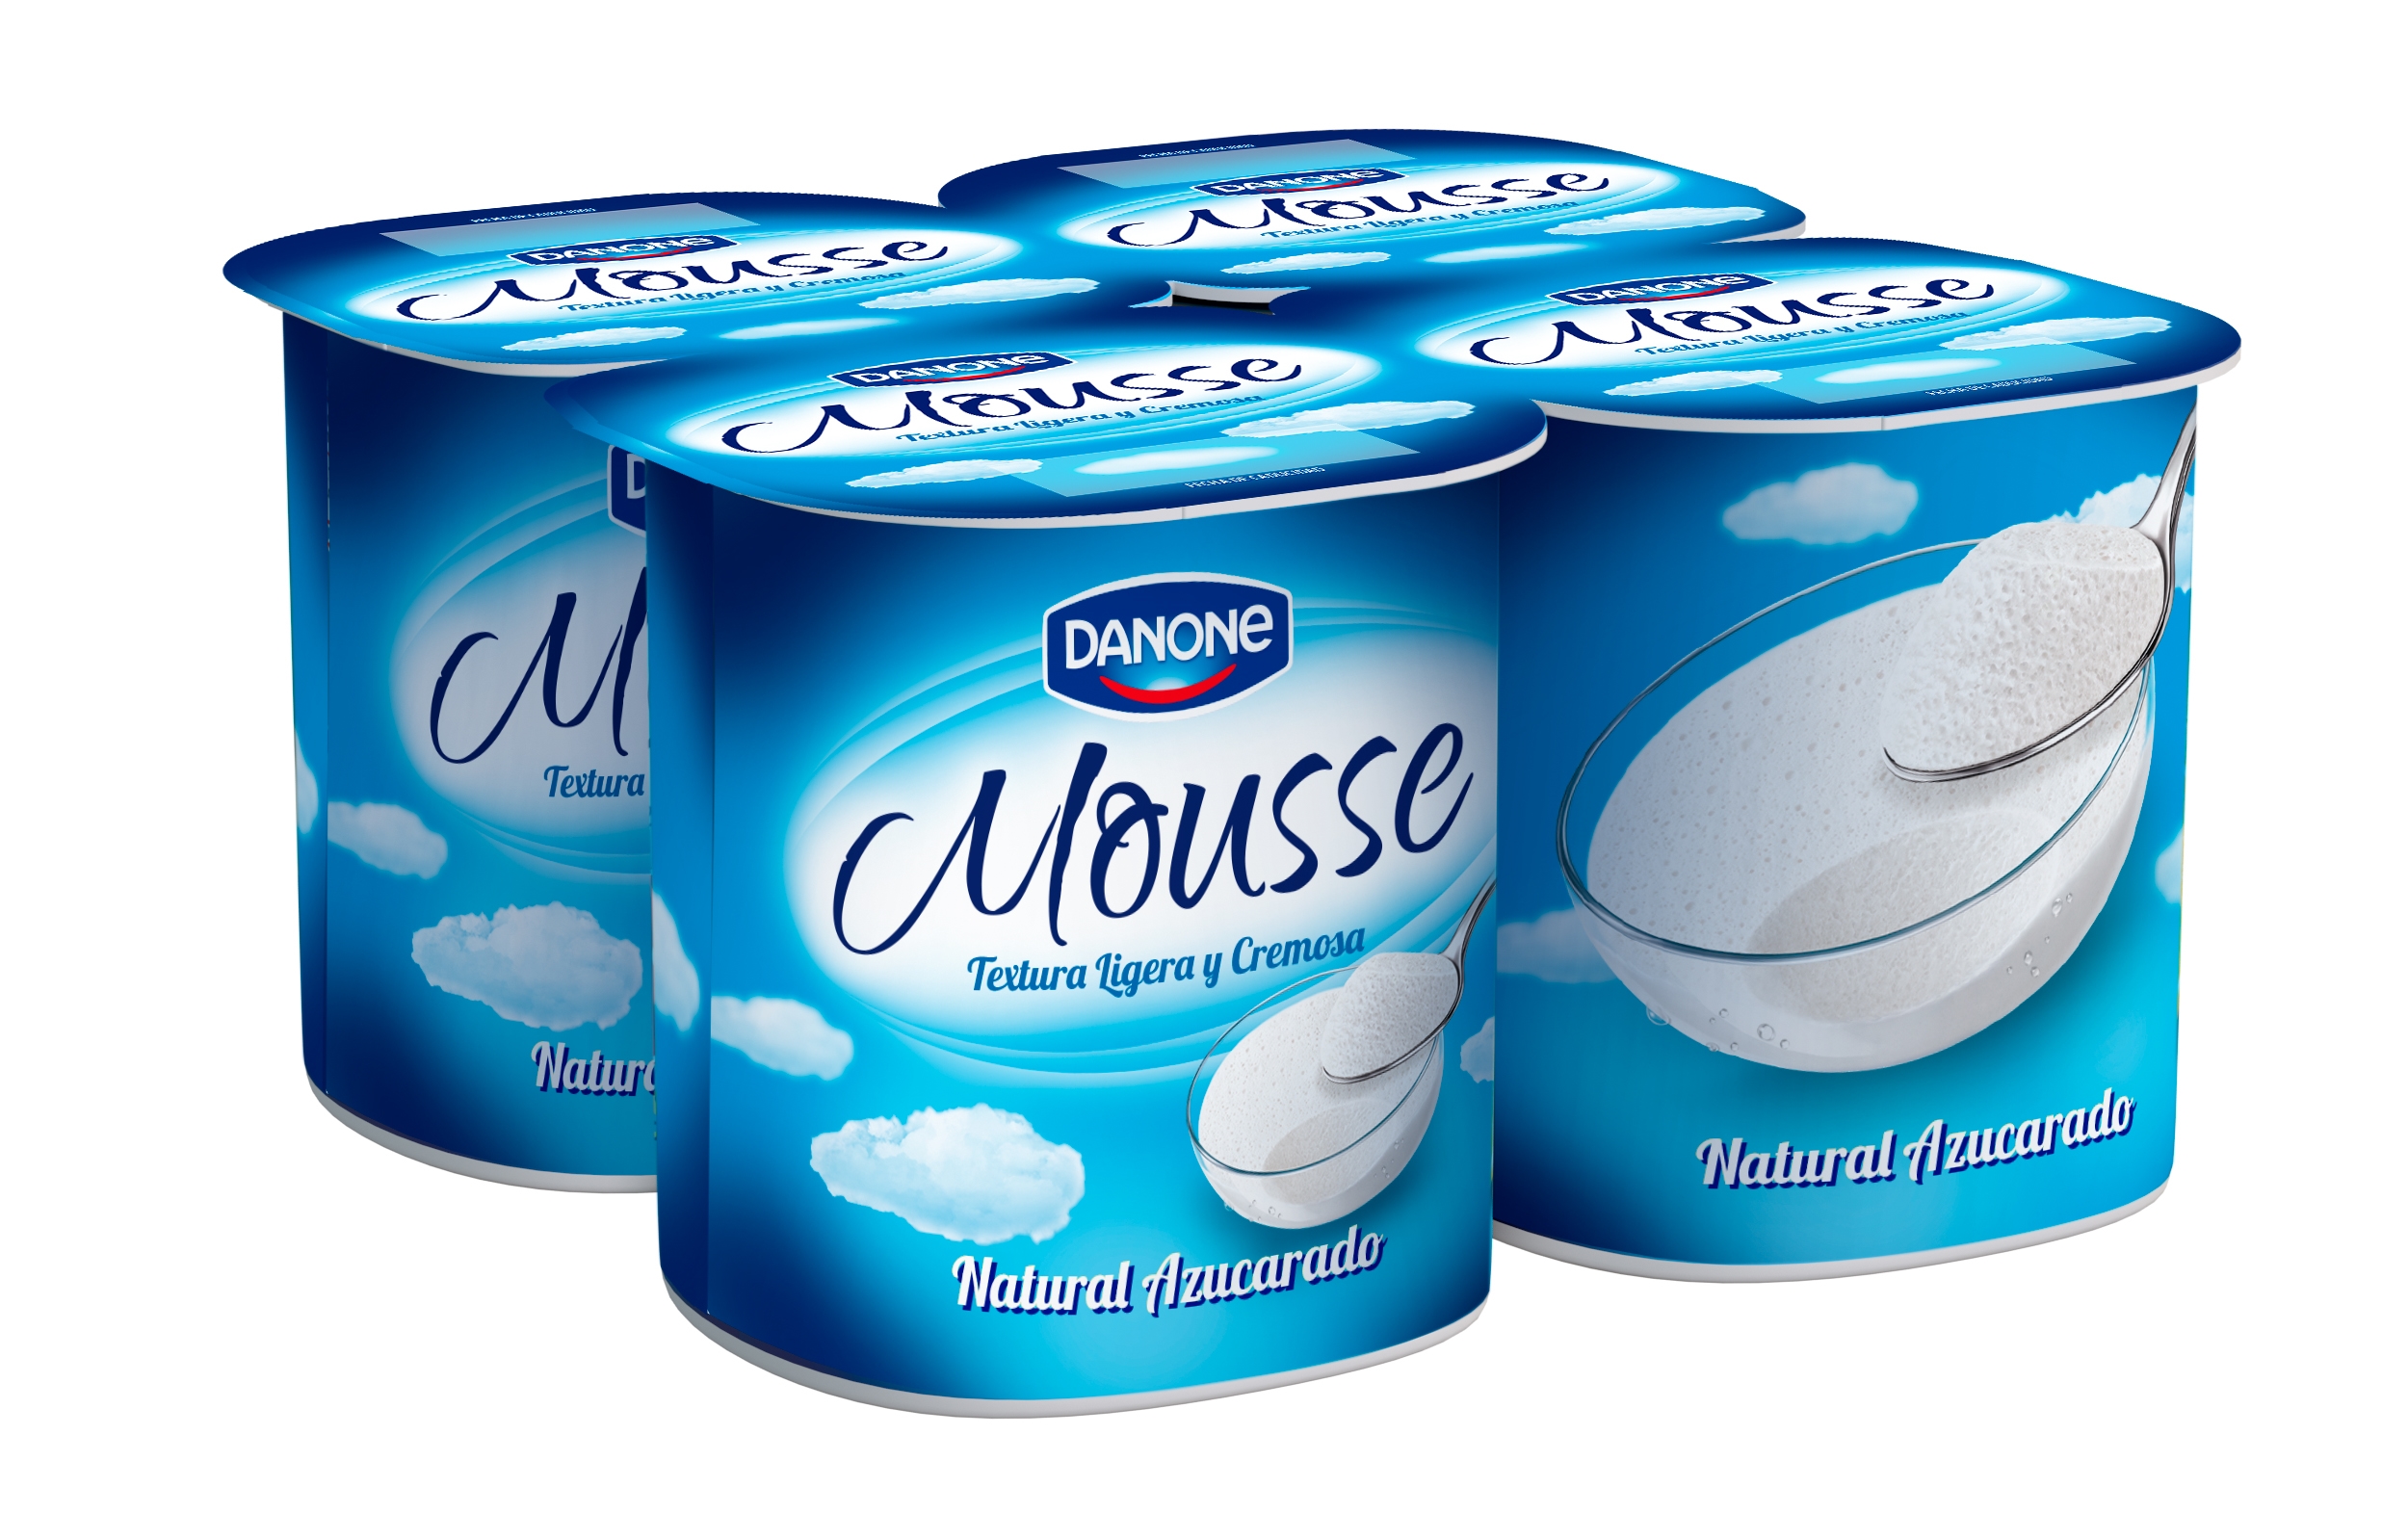 Mousse Natural - Danone